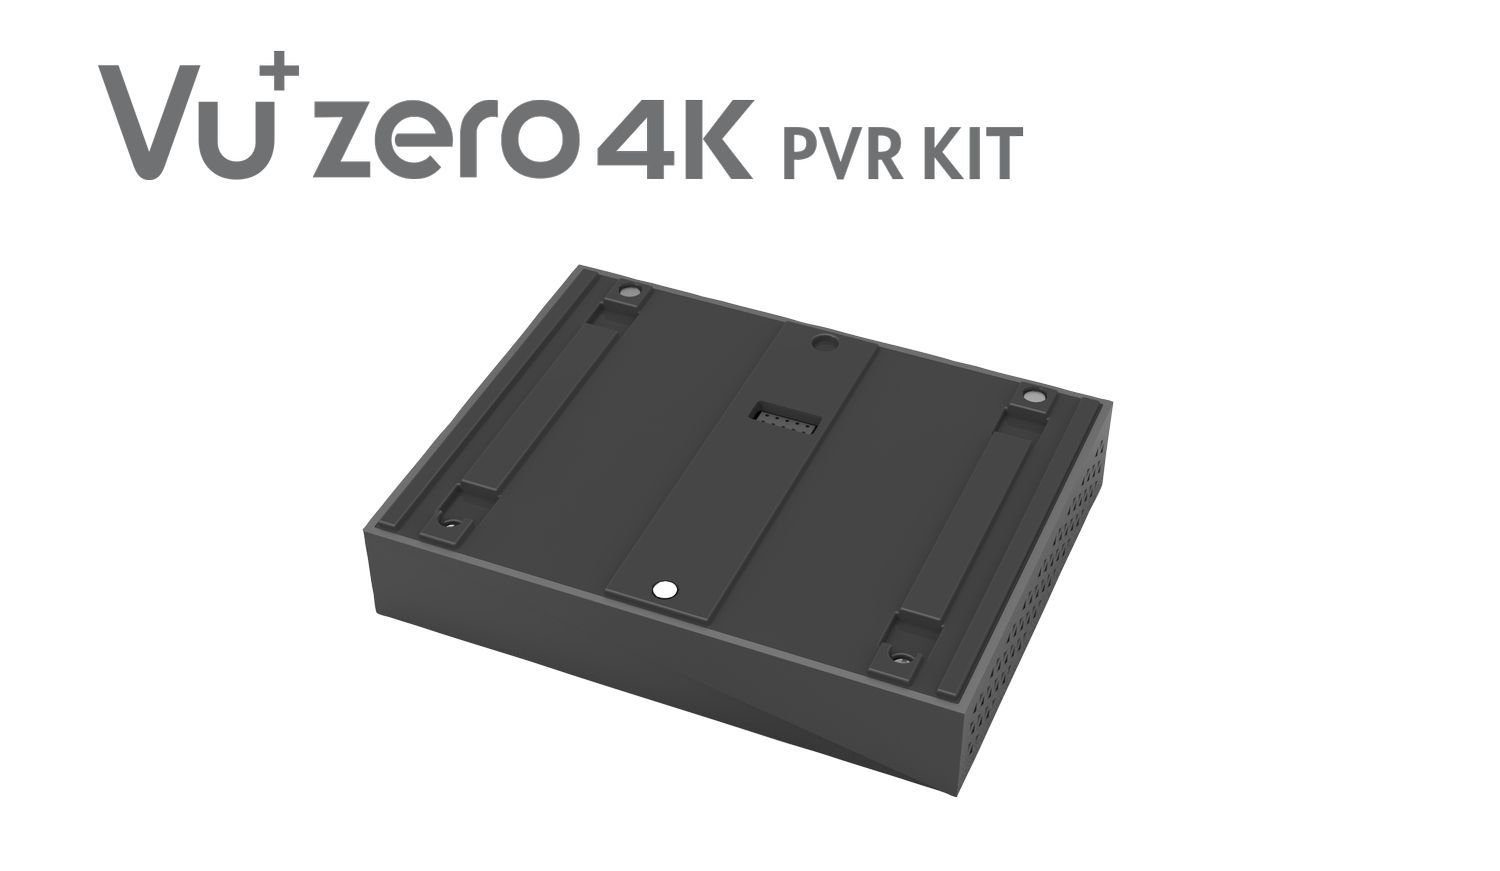 VU+ 2TB, Inklusive HDD, 4K Zero PVR schwarz Tuner Kit VU+